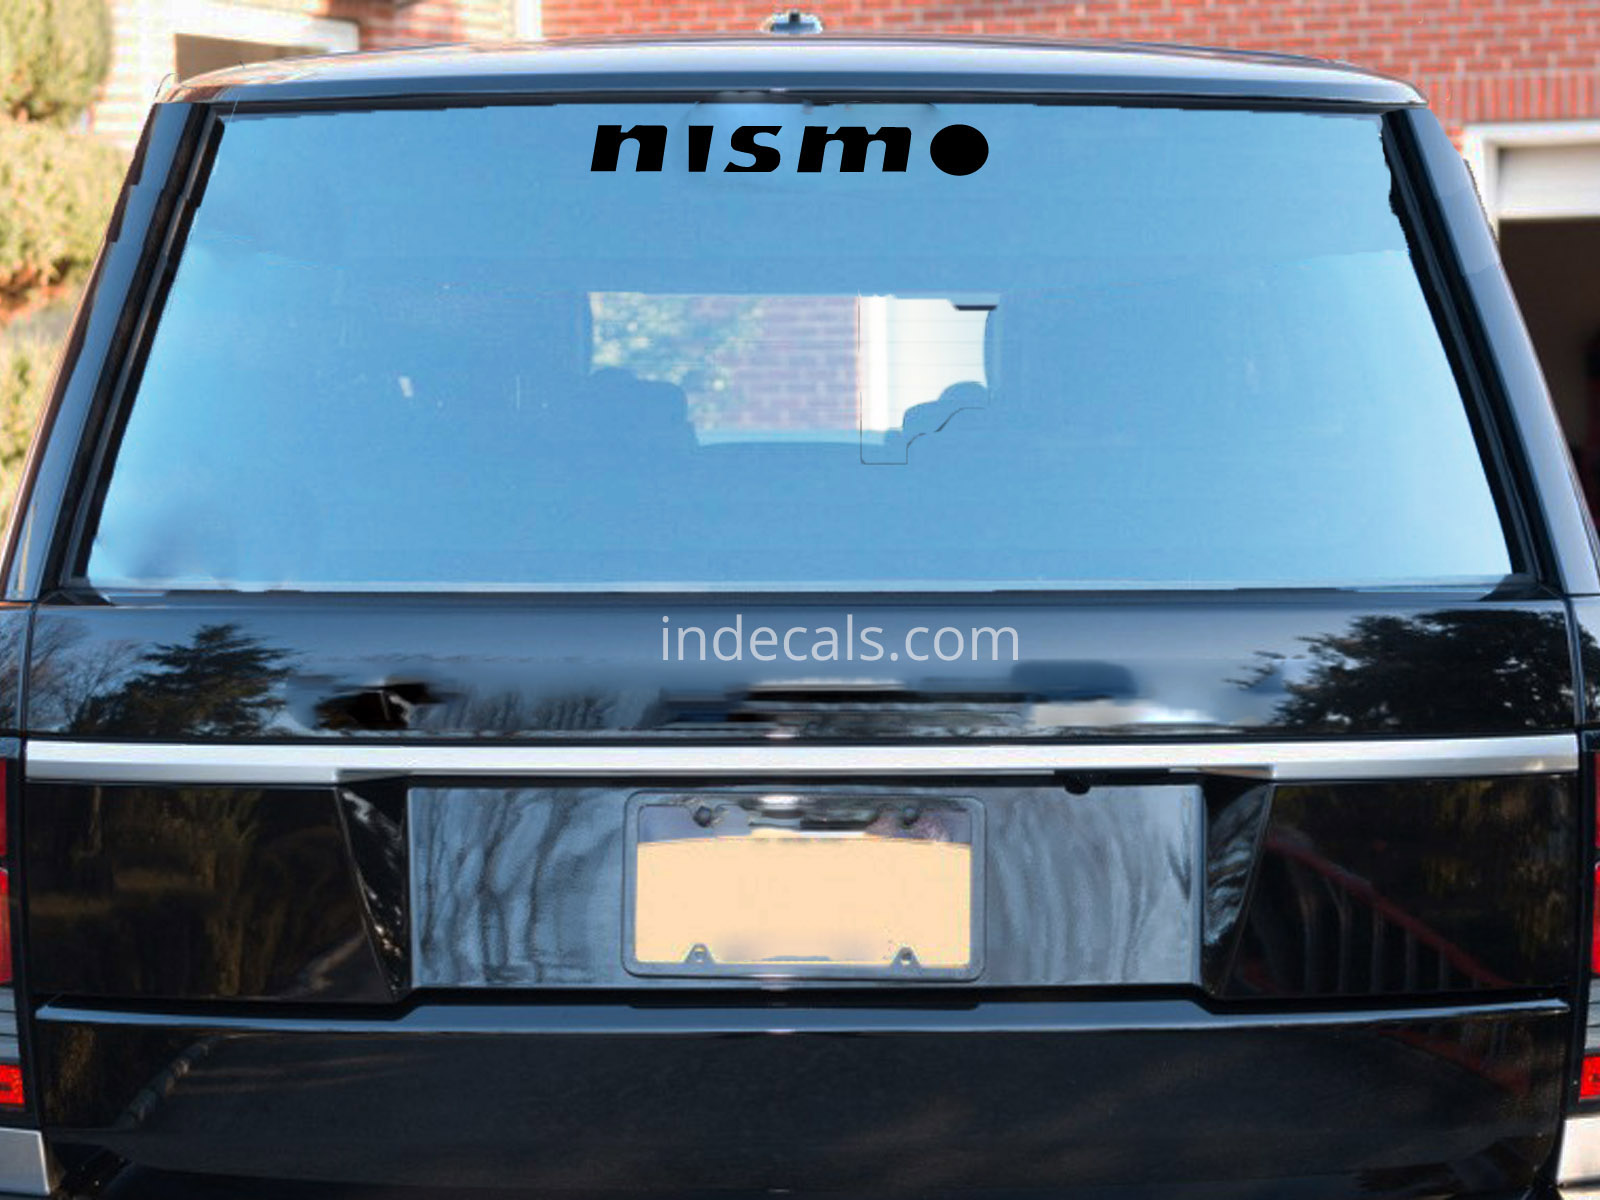 1 x Nismo Sticker for Windshield or Back Window - Black